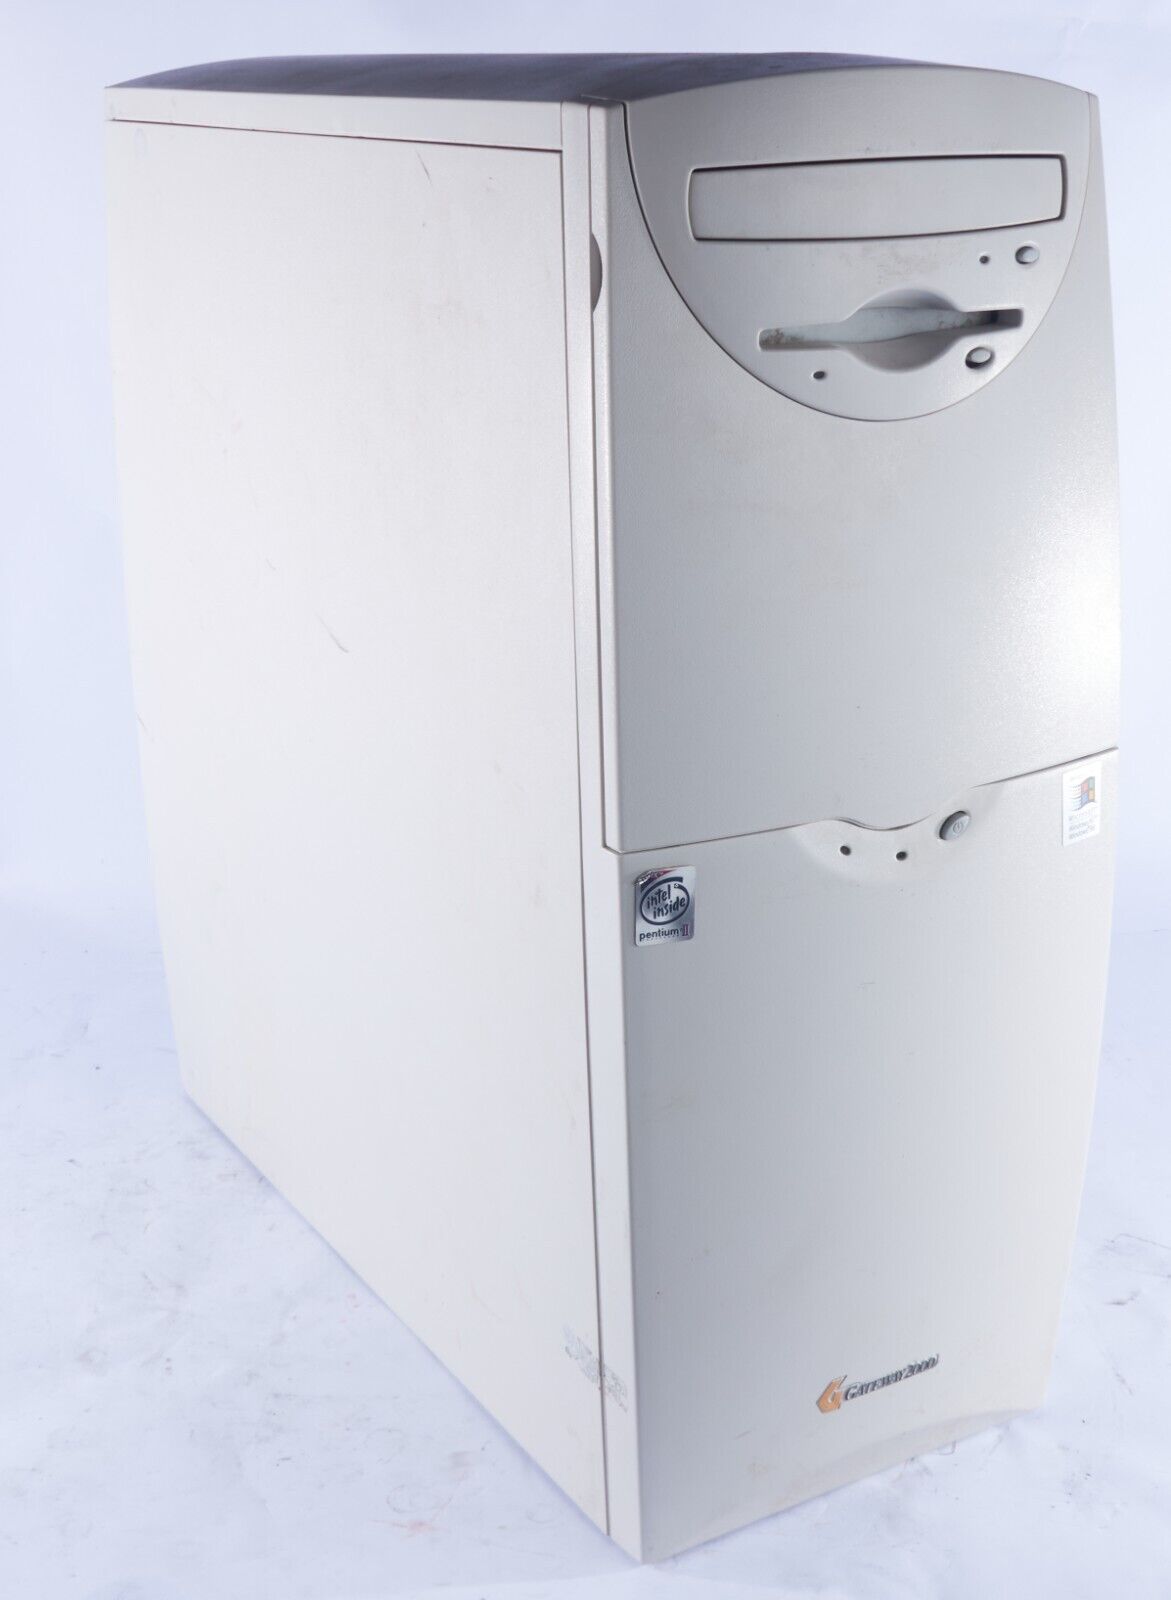 Vintage Gateway G6-333 “LPMINI-TOWER” Desktop Computer Pentium II 333MHz Tested